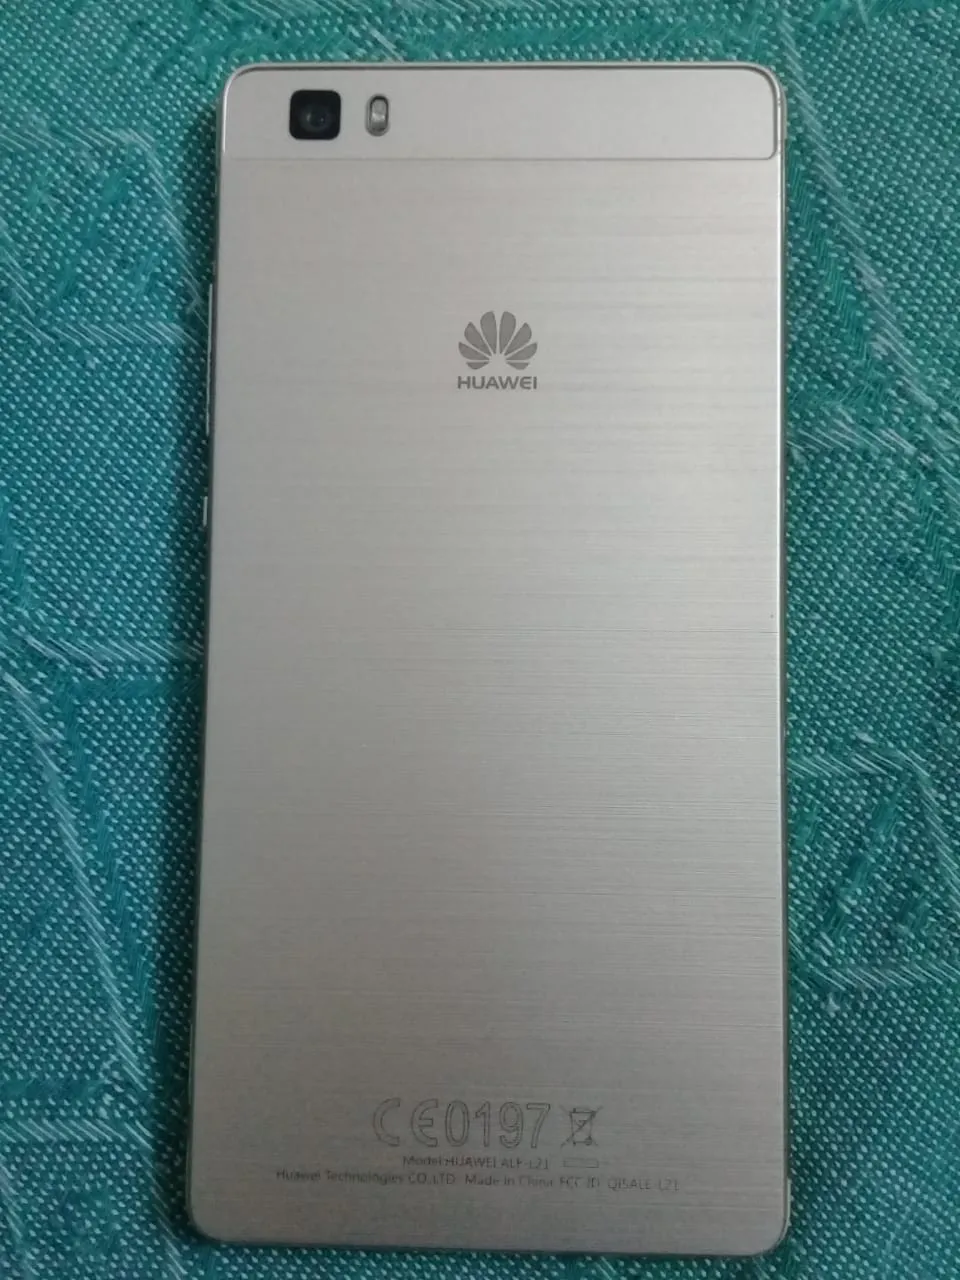 Huawei P8 Lite - photo 2